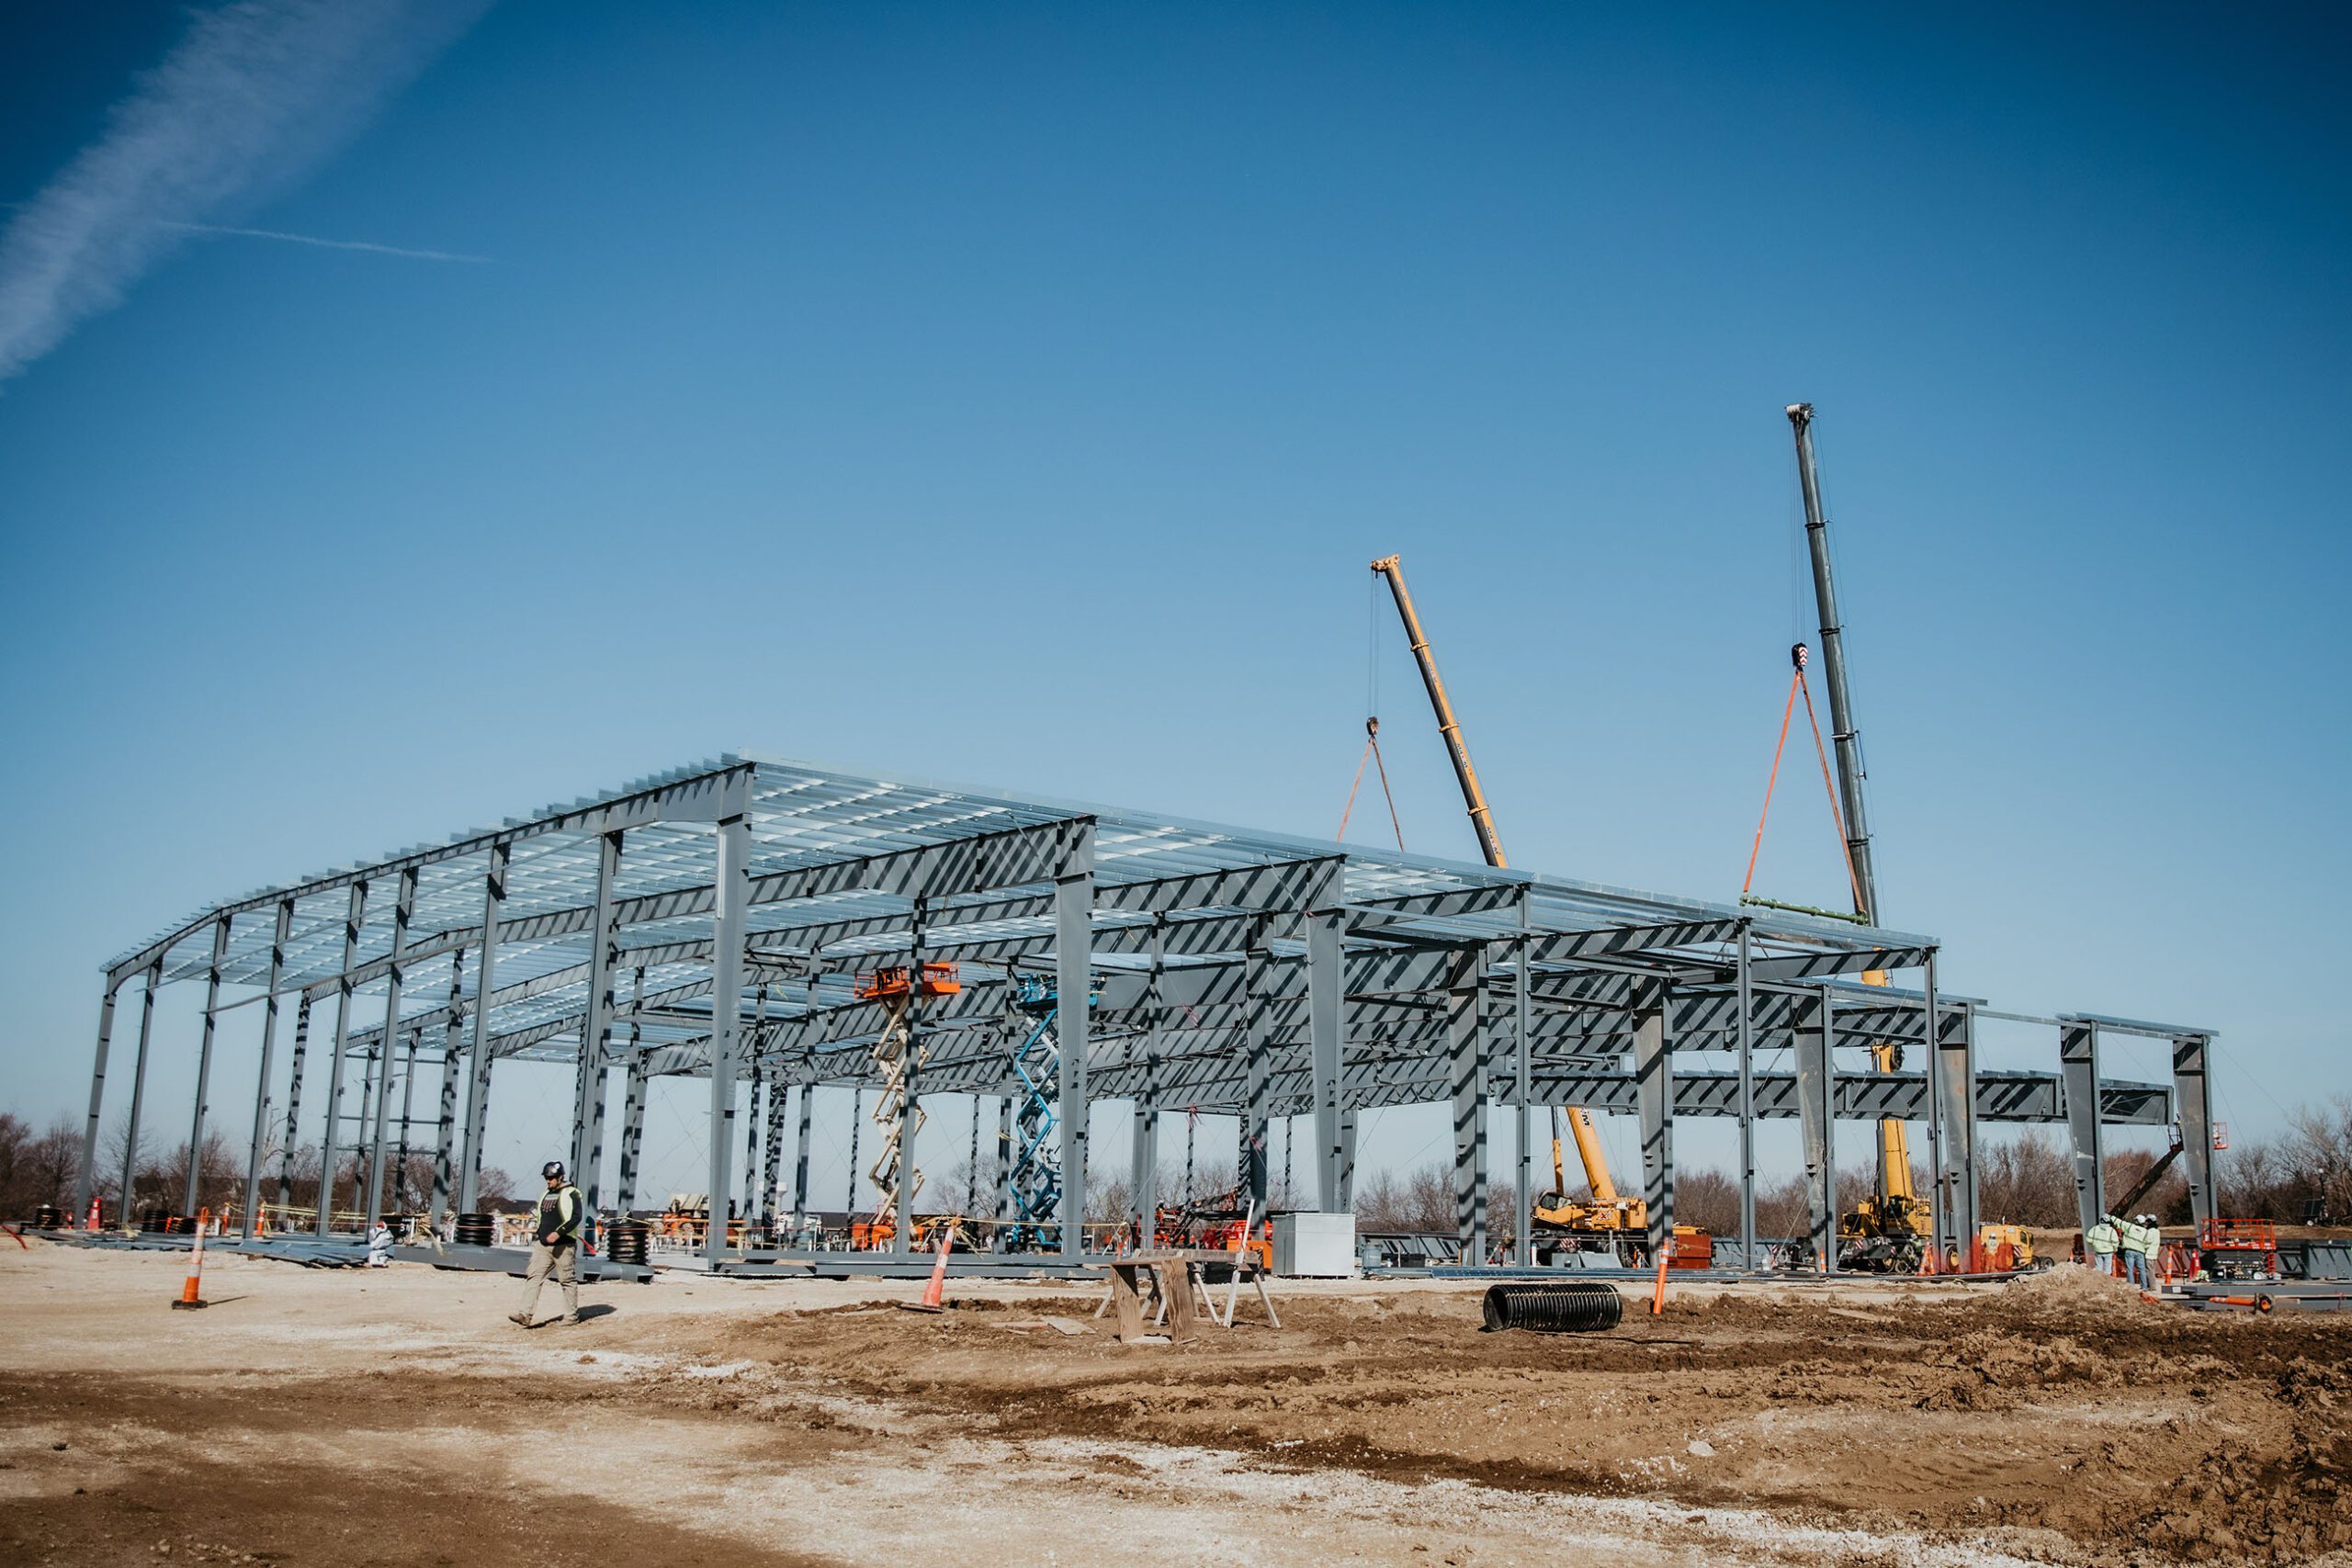 Metal building framework with cranes